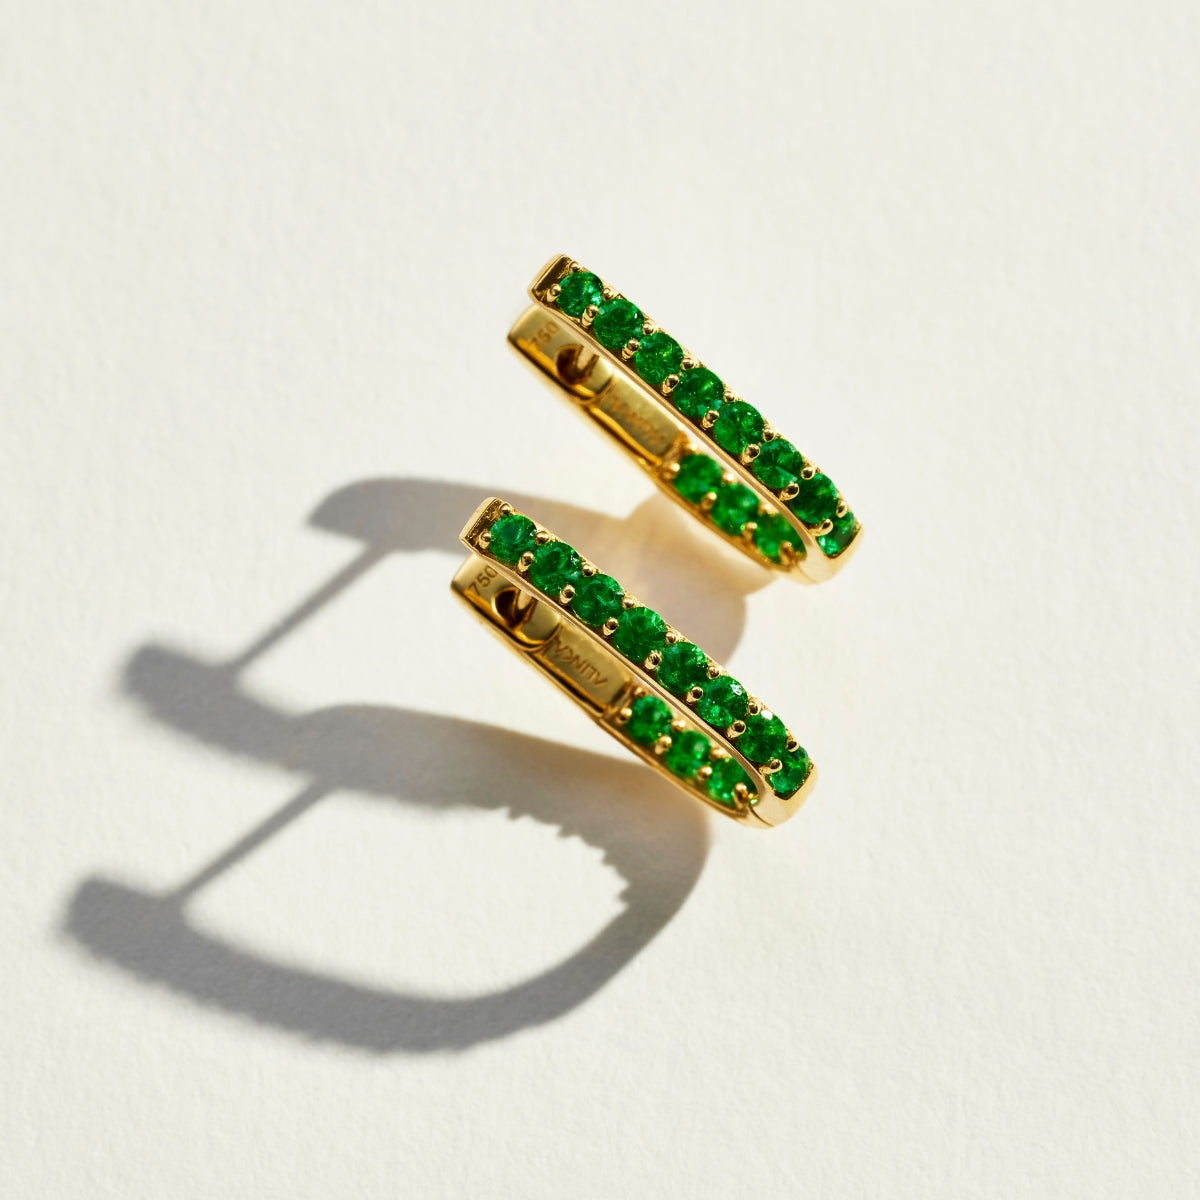 Emerald LINKA mini earrings